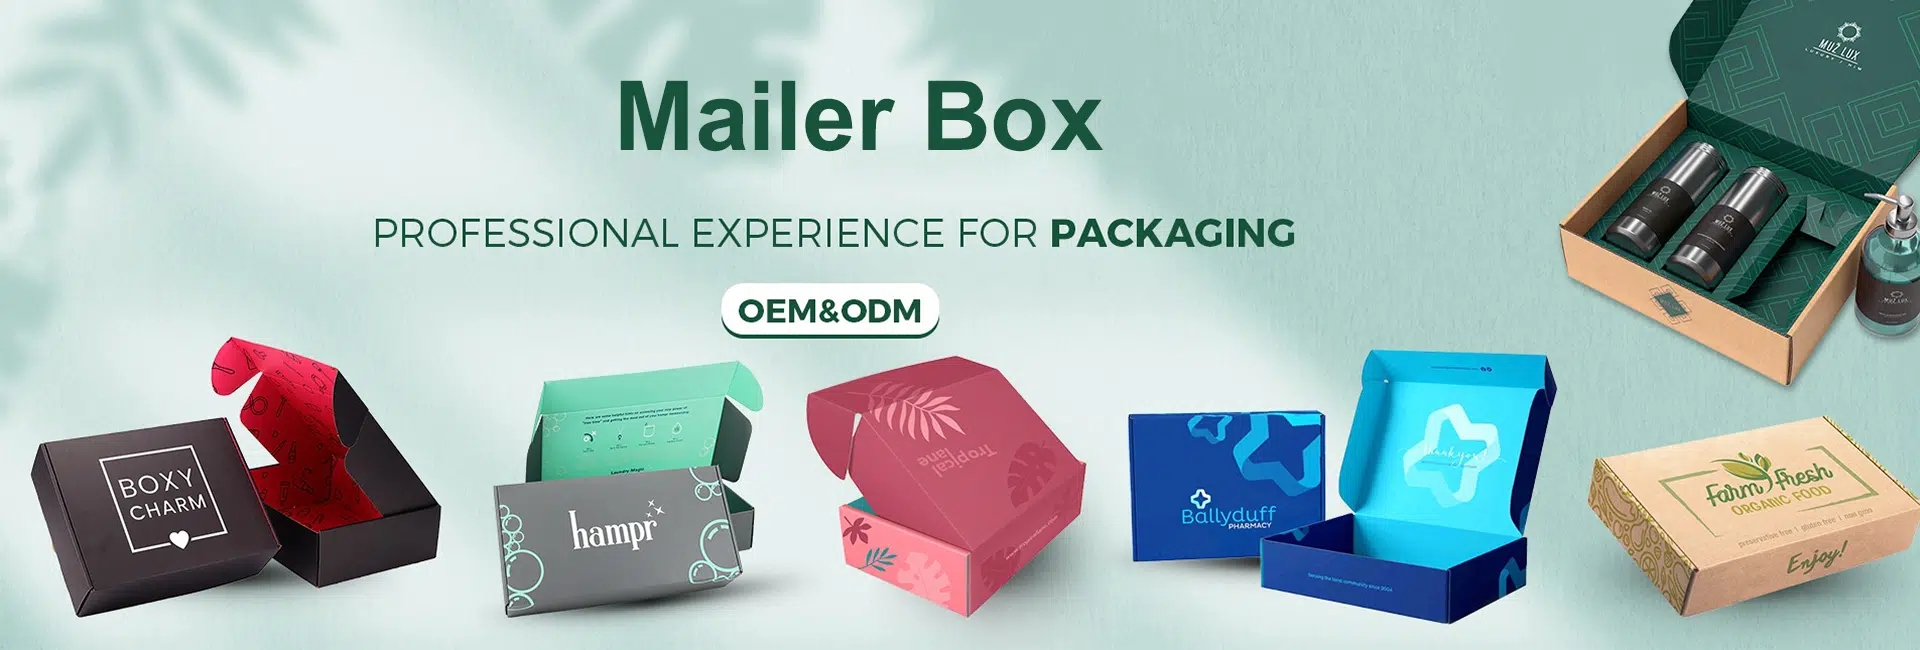 mailer-box.jpg.webp